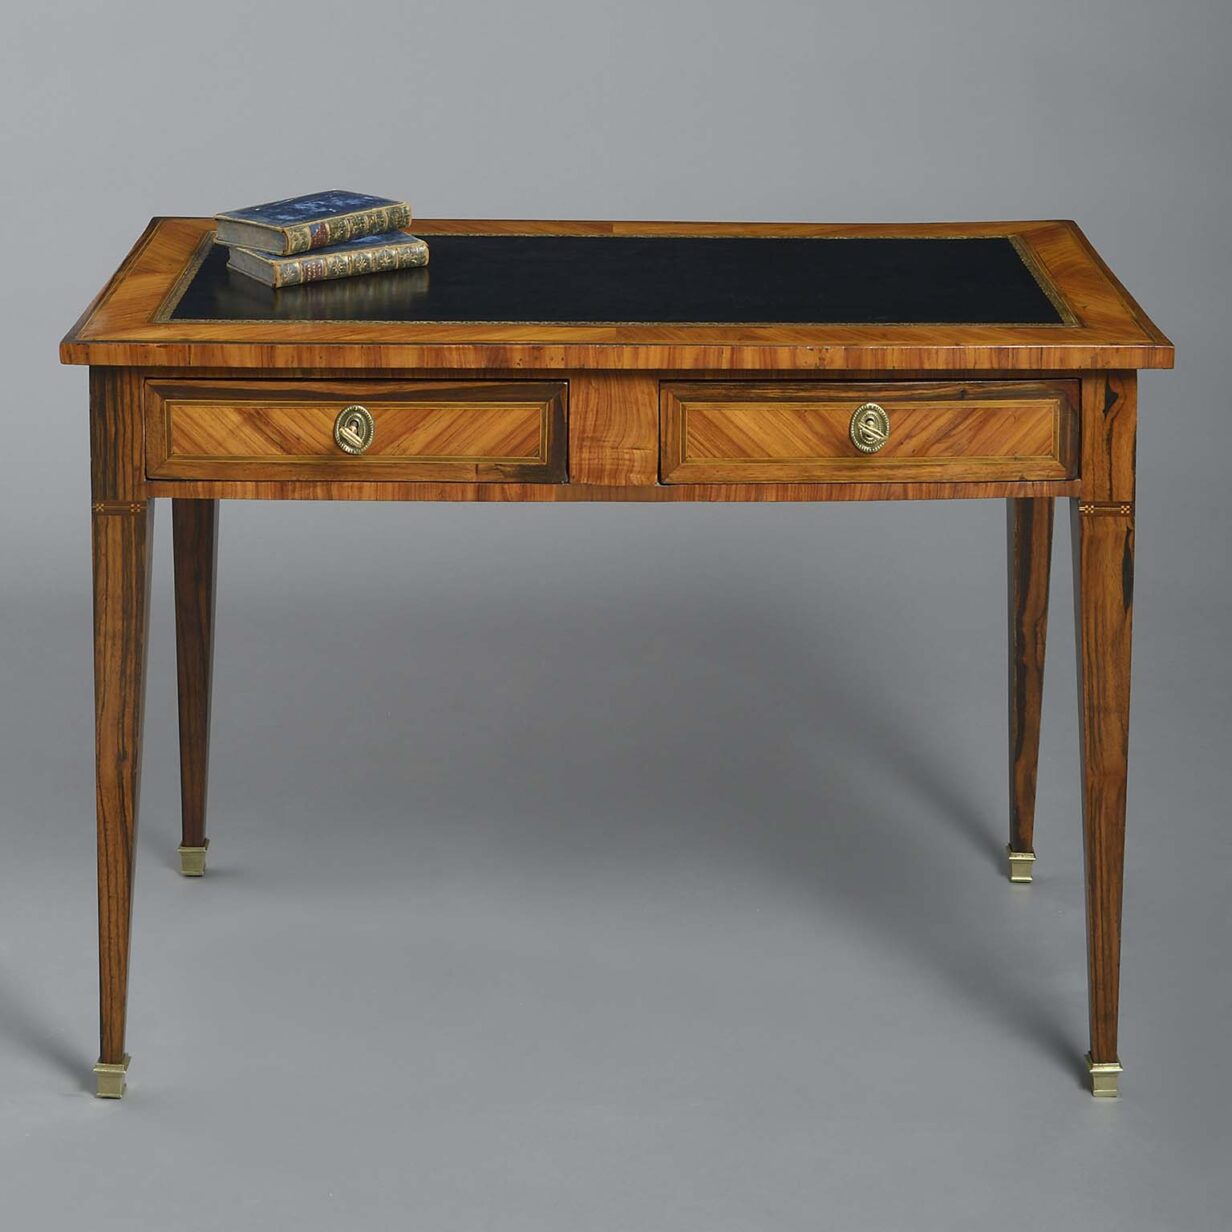 Late 18th century louis xvi period tulipwood writing table